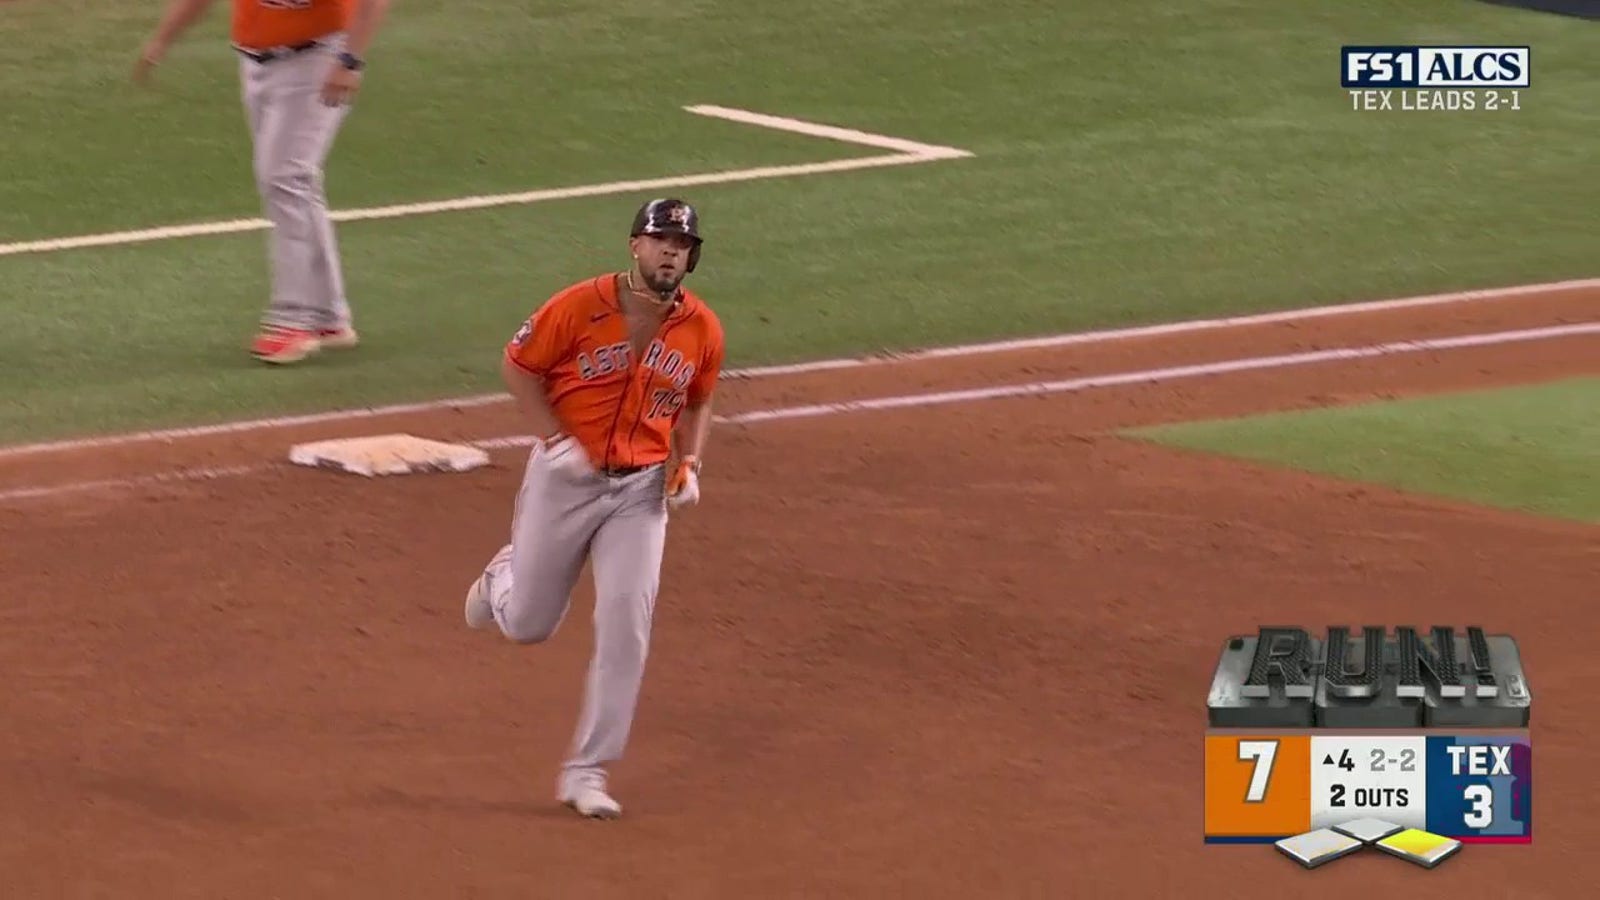 José Abreu CRUSHES three-run homer as Astros go up 7-3 vs. Rangers